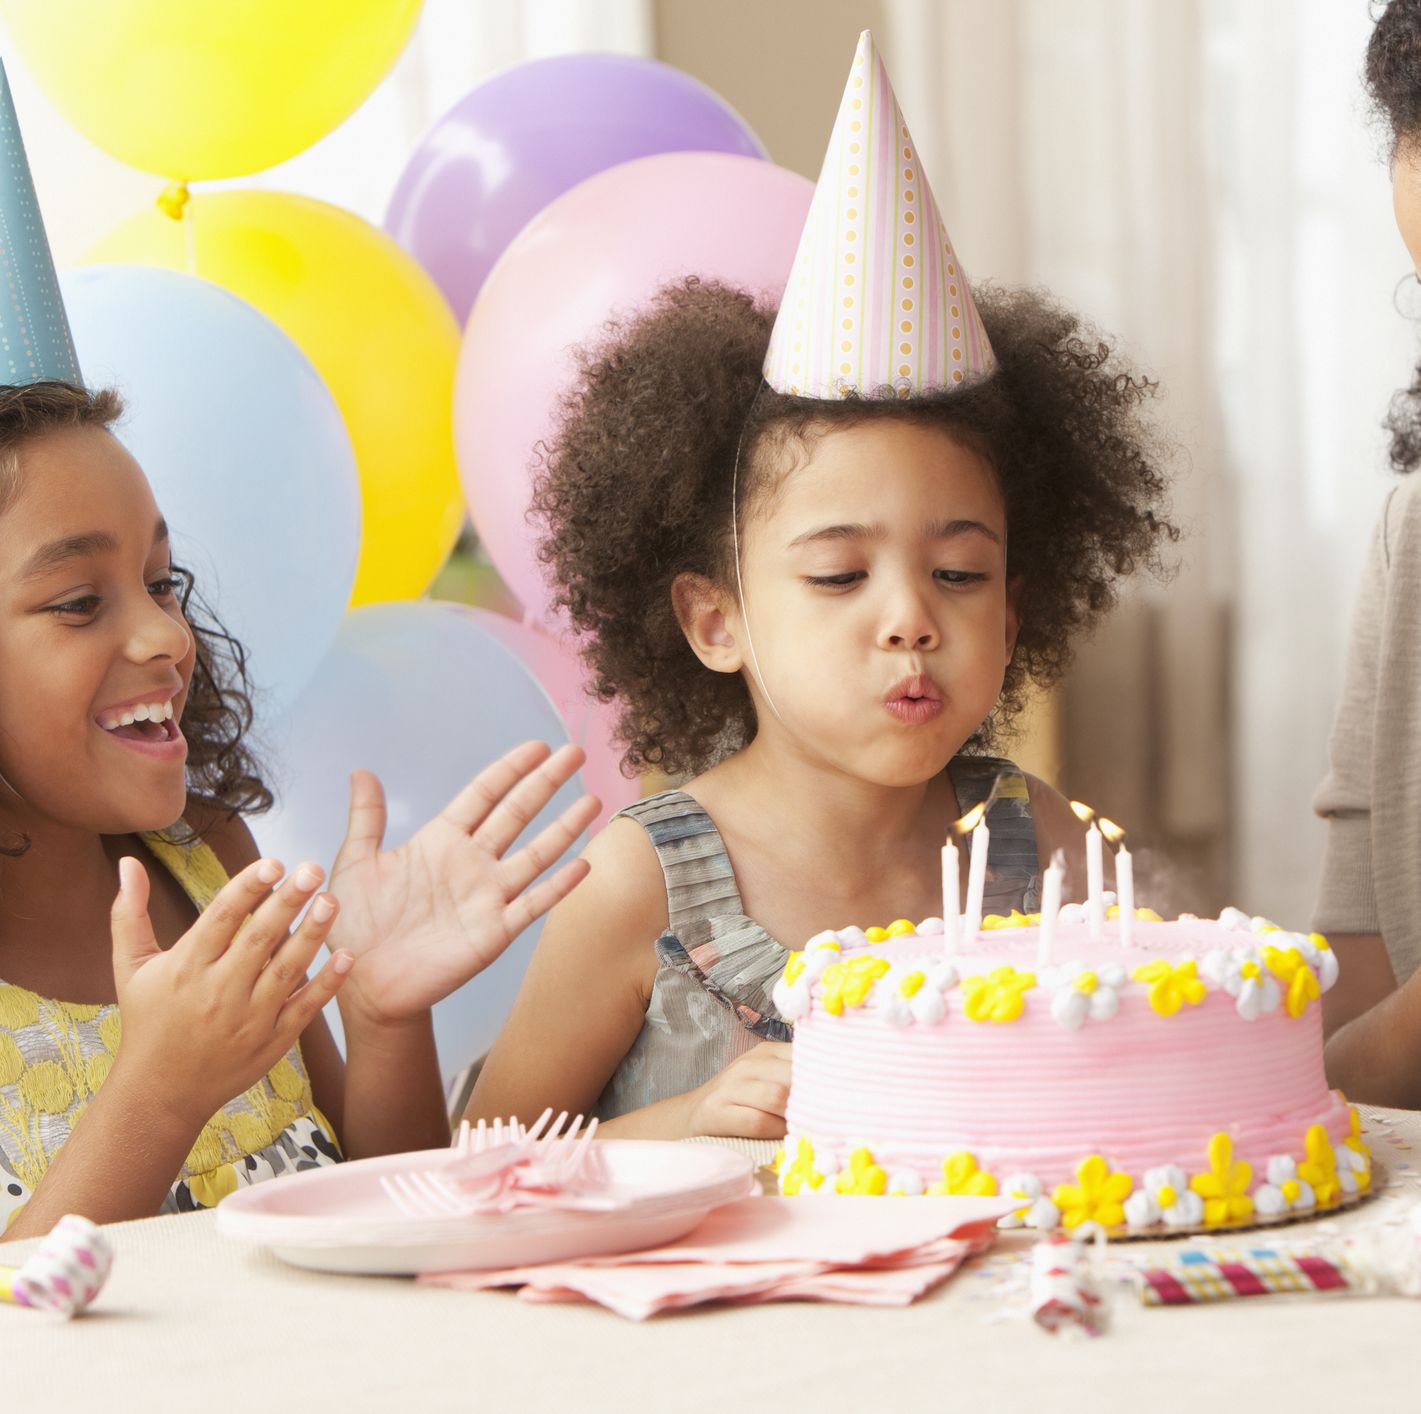 best 25th birthday party ideas